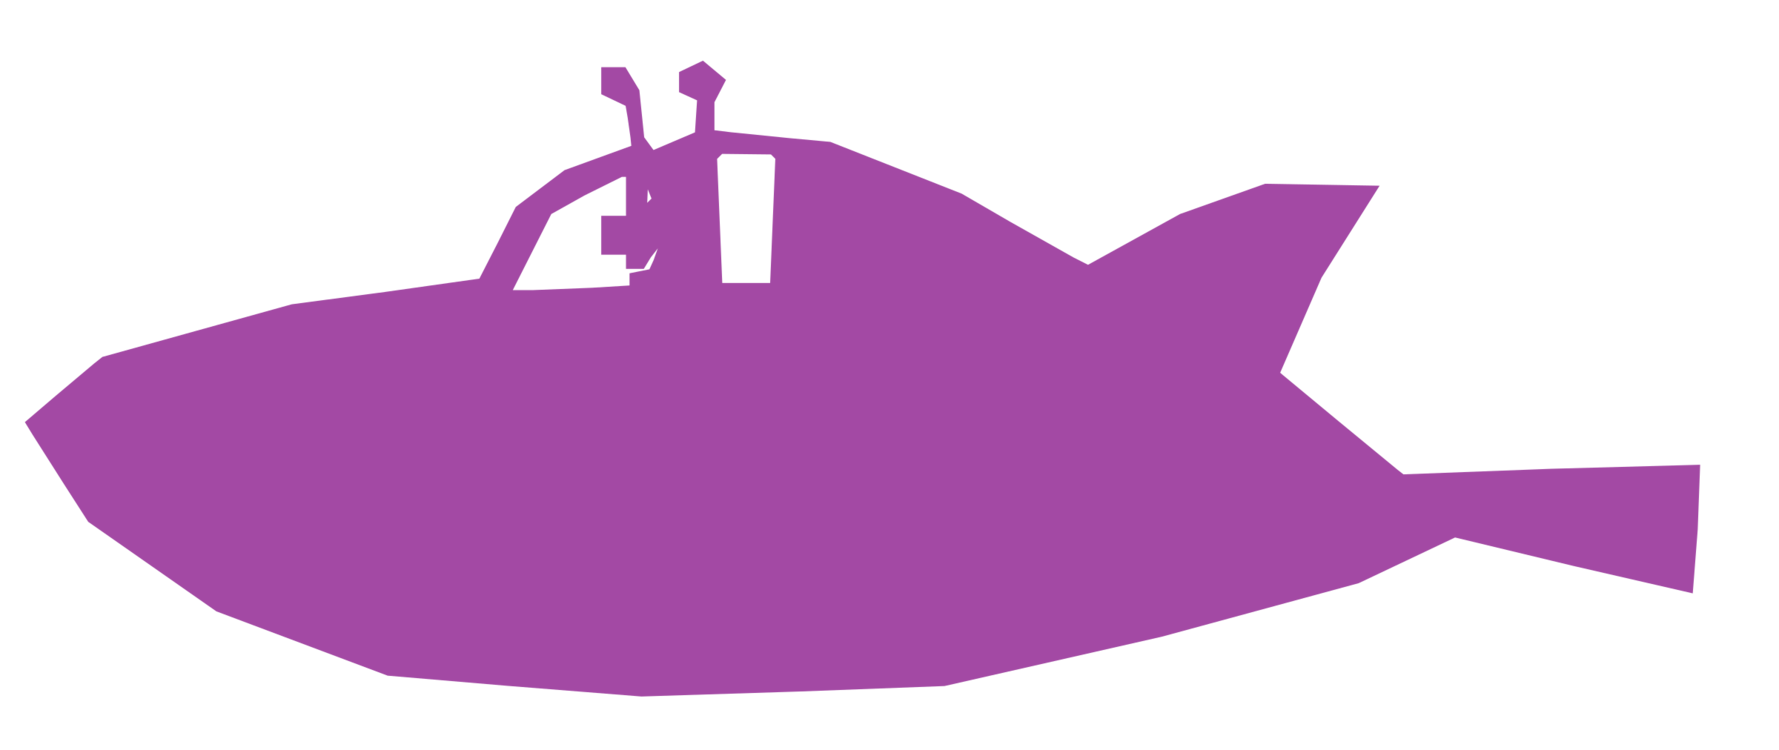 Purple,Fish,Violet